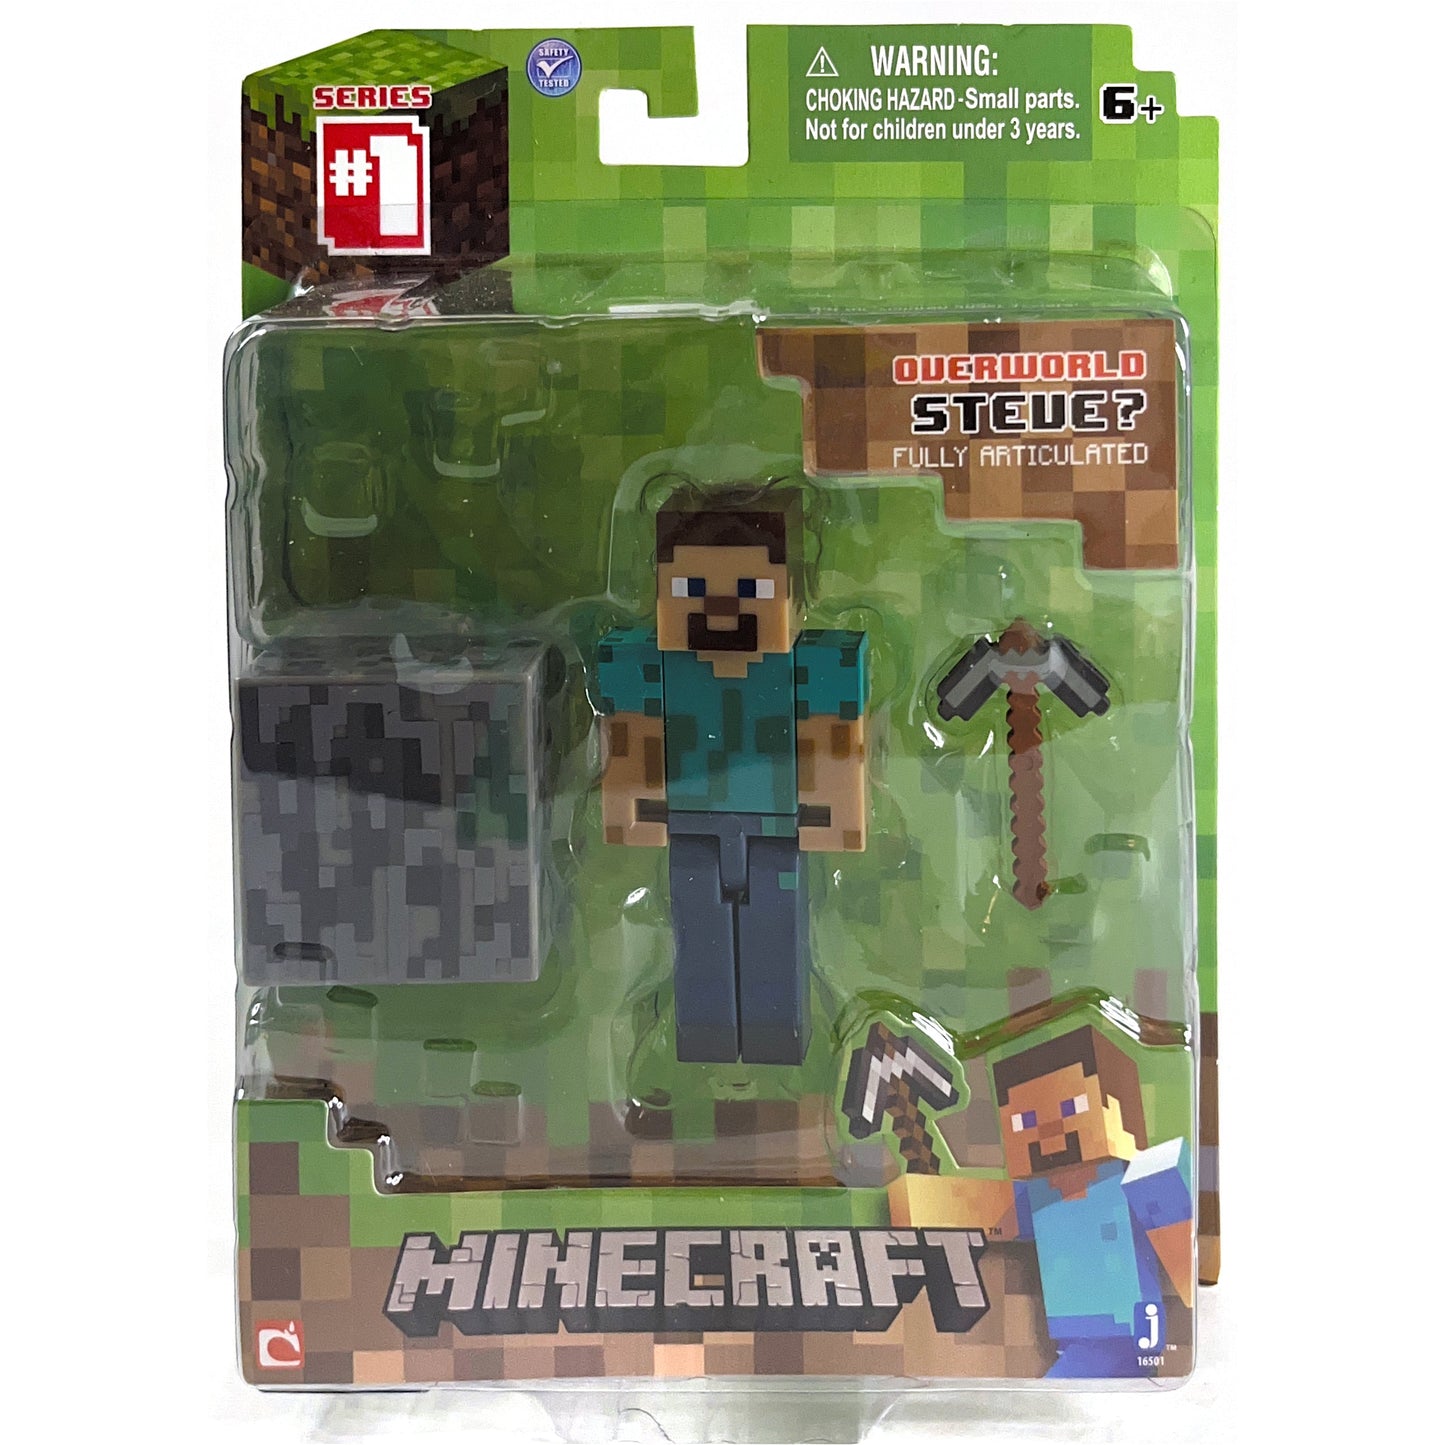 Jazwares Minecraft Overworld Steve? Series 1 Fully Articulated Figure